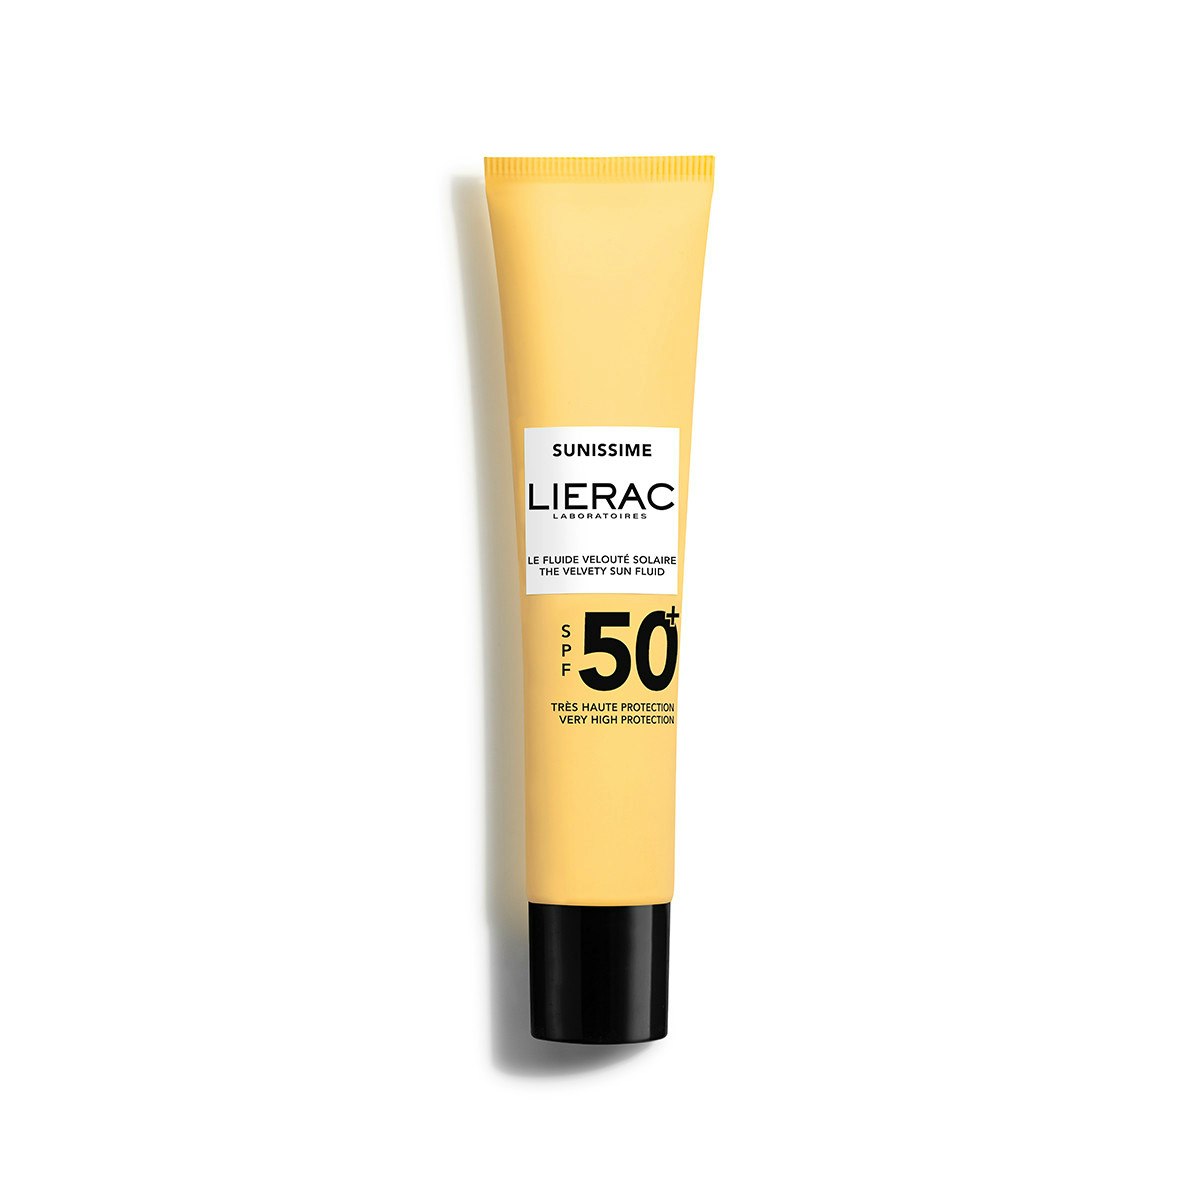 Lierac SUNISSIME Anti-Aging Gesicht Sonnen Fluid SPF 50+ - 40 ml